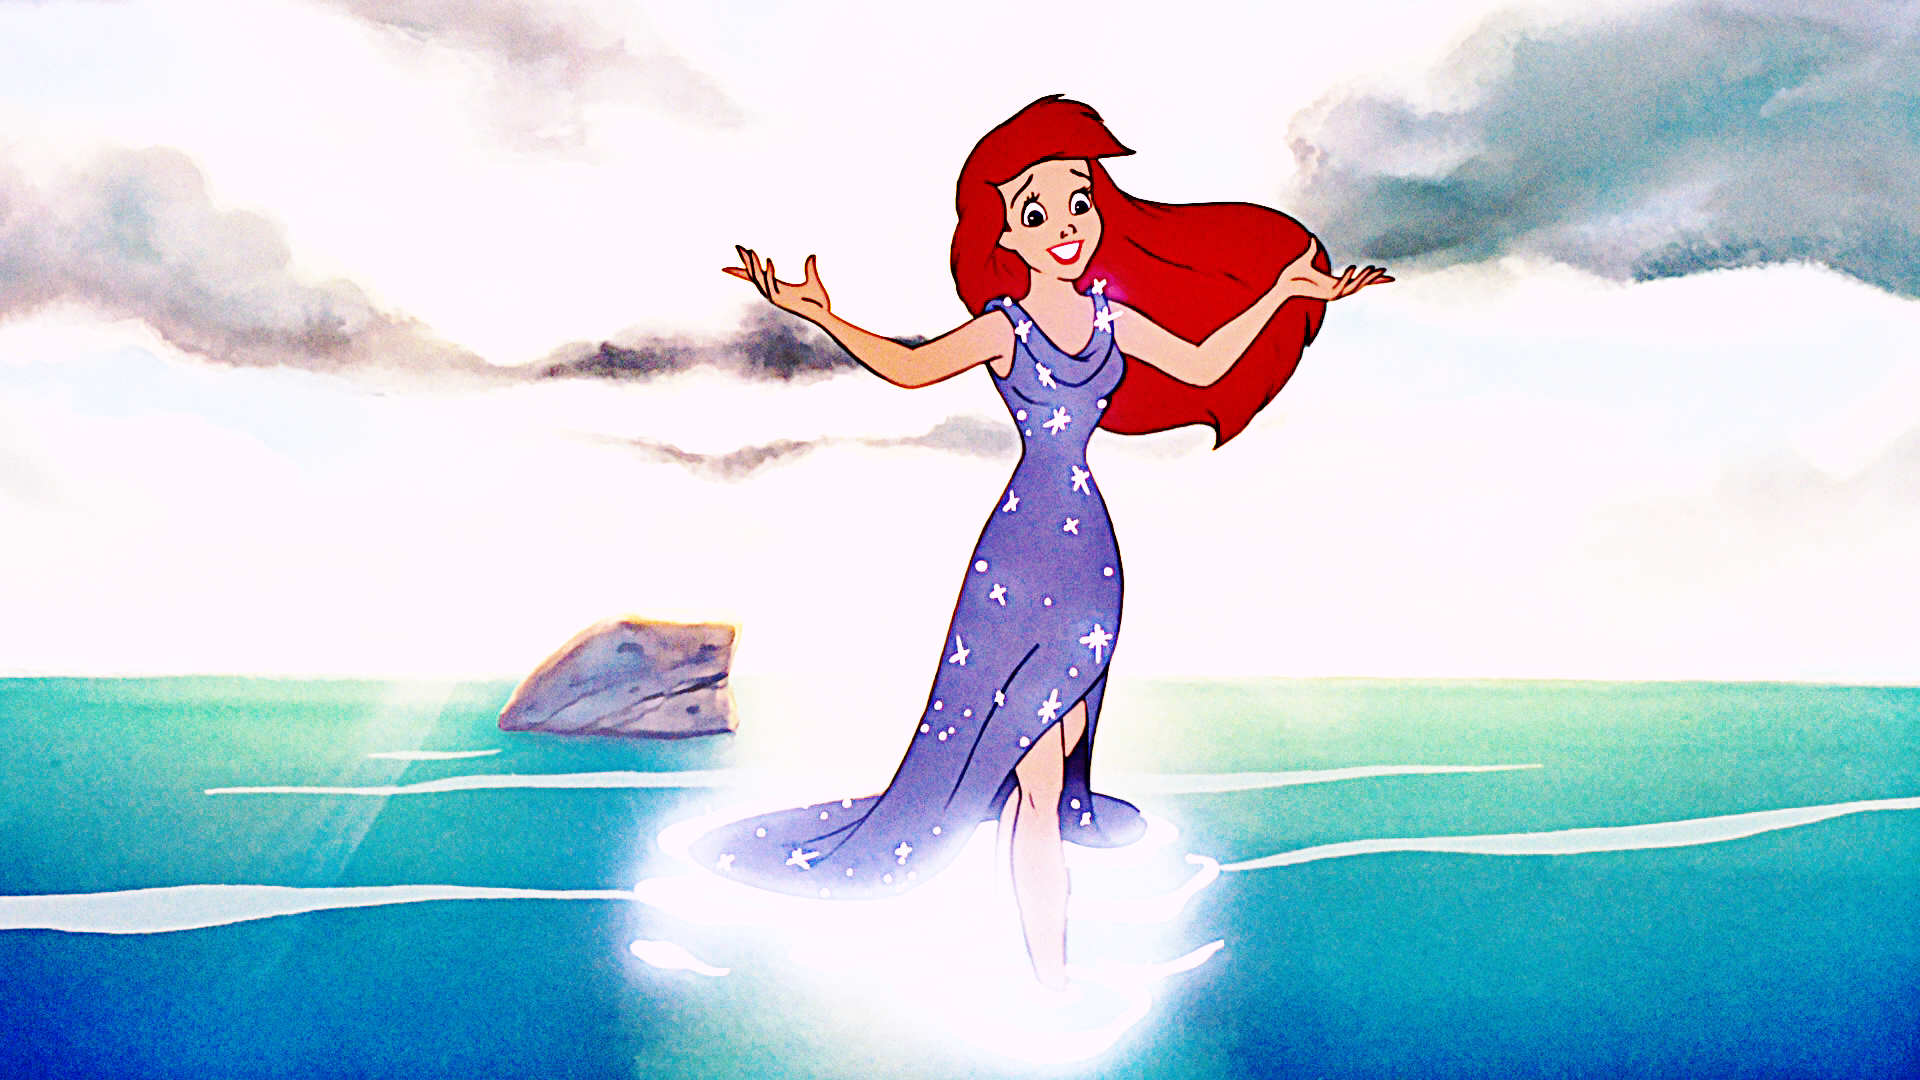 Walt-Disney-Screencaps-The-Little-Mermaid-walt-disney-characters-40128961-1920-1080.png